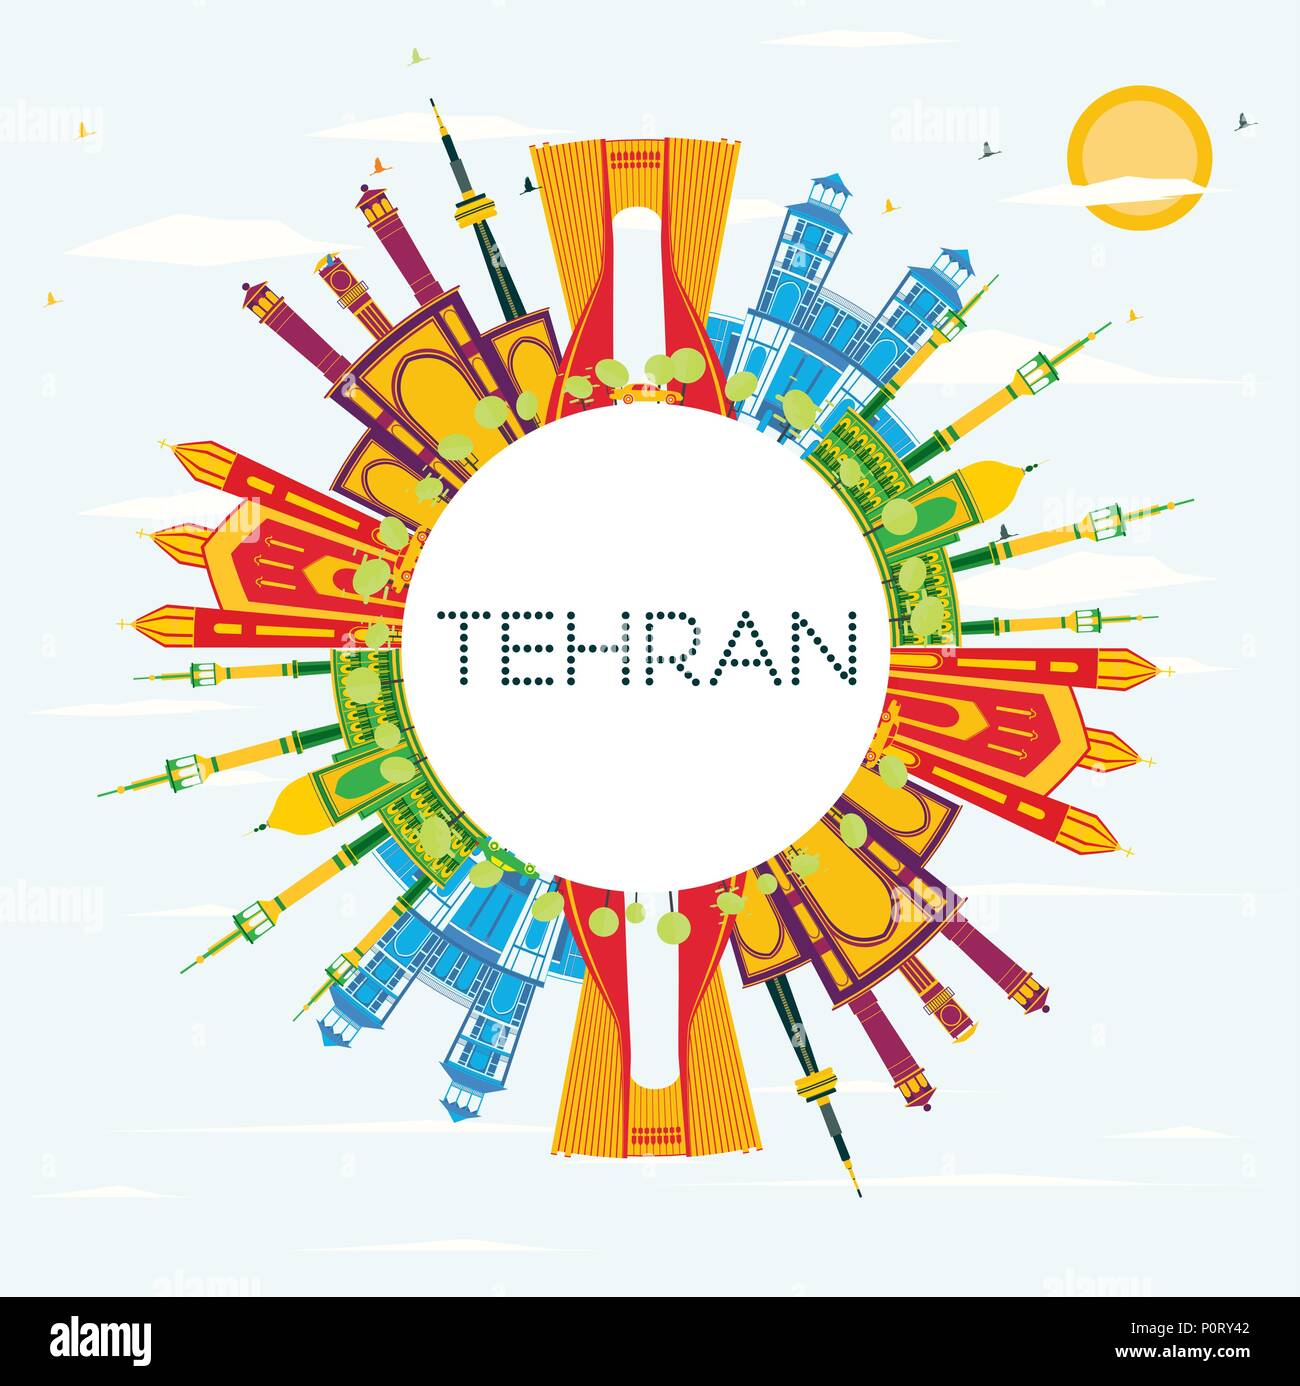 Tehran Skyline with Color Landmarks, Blue Sky and Copy Space. Vector Illustration. Stock Vector